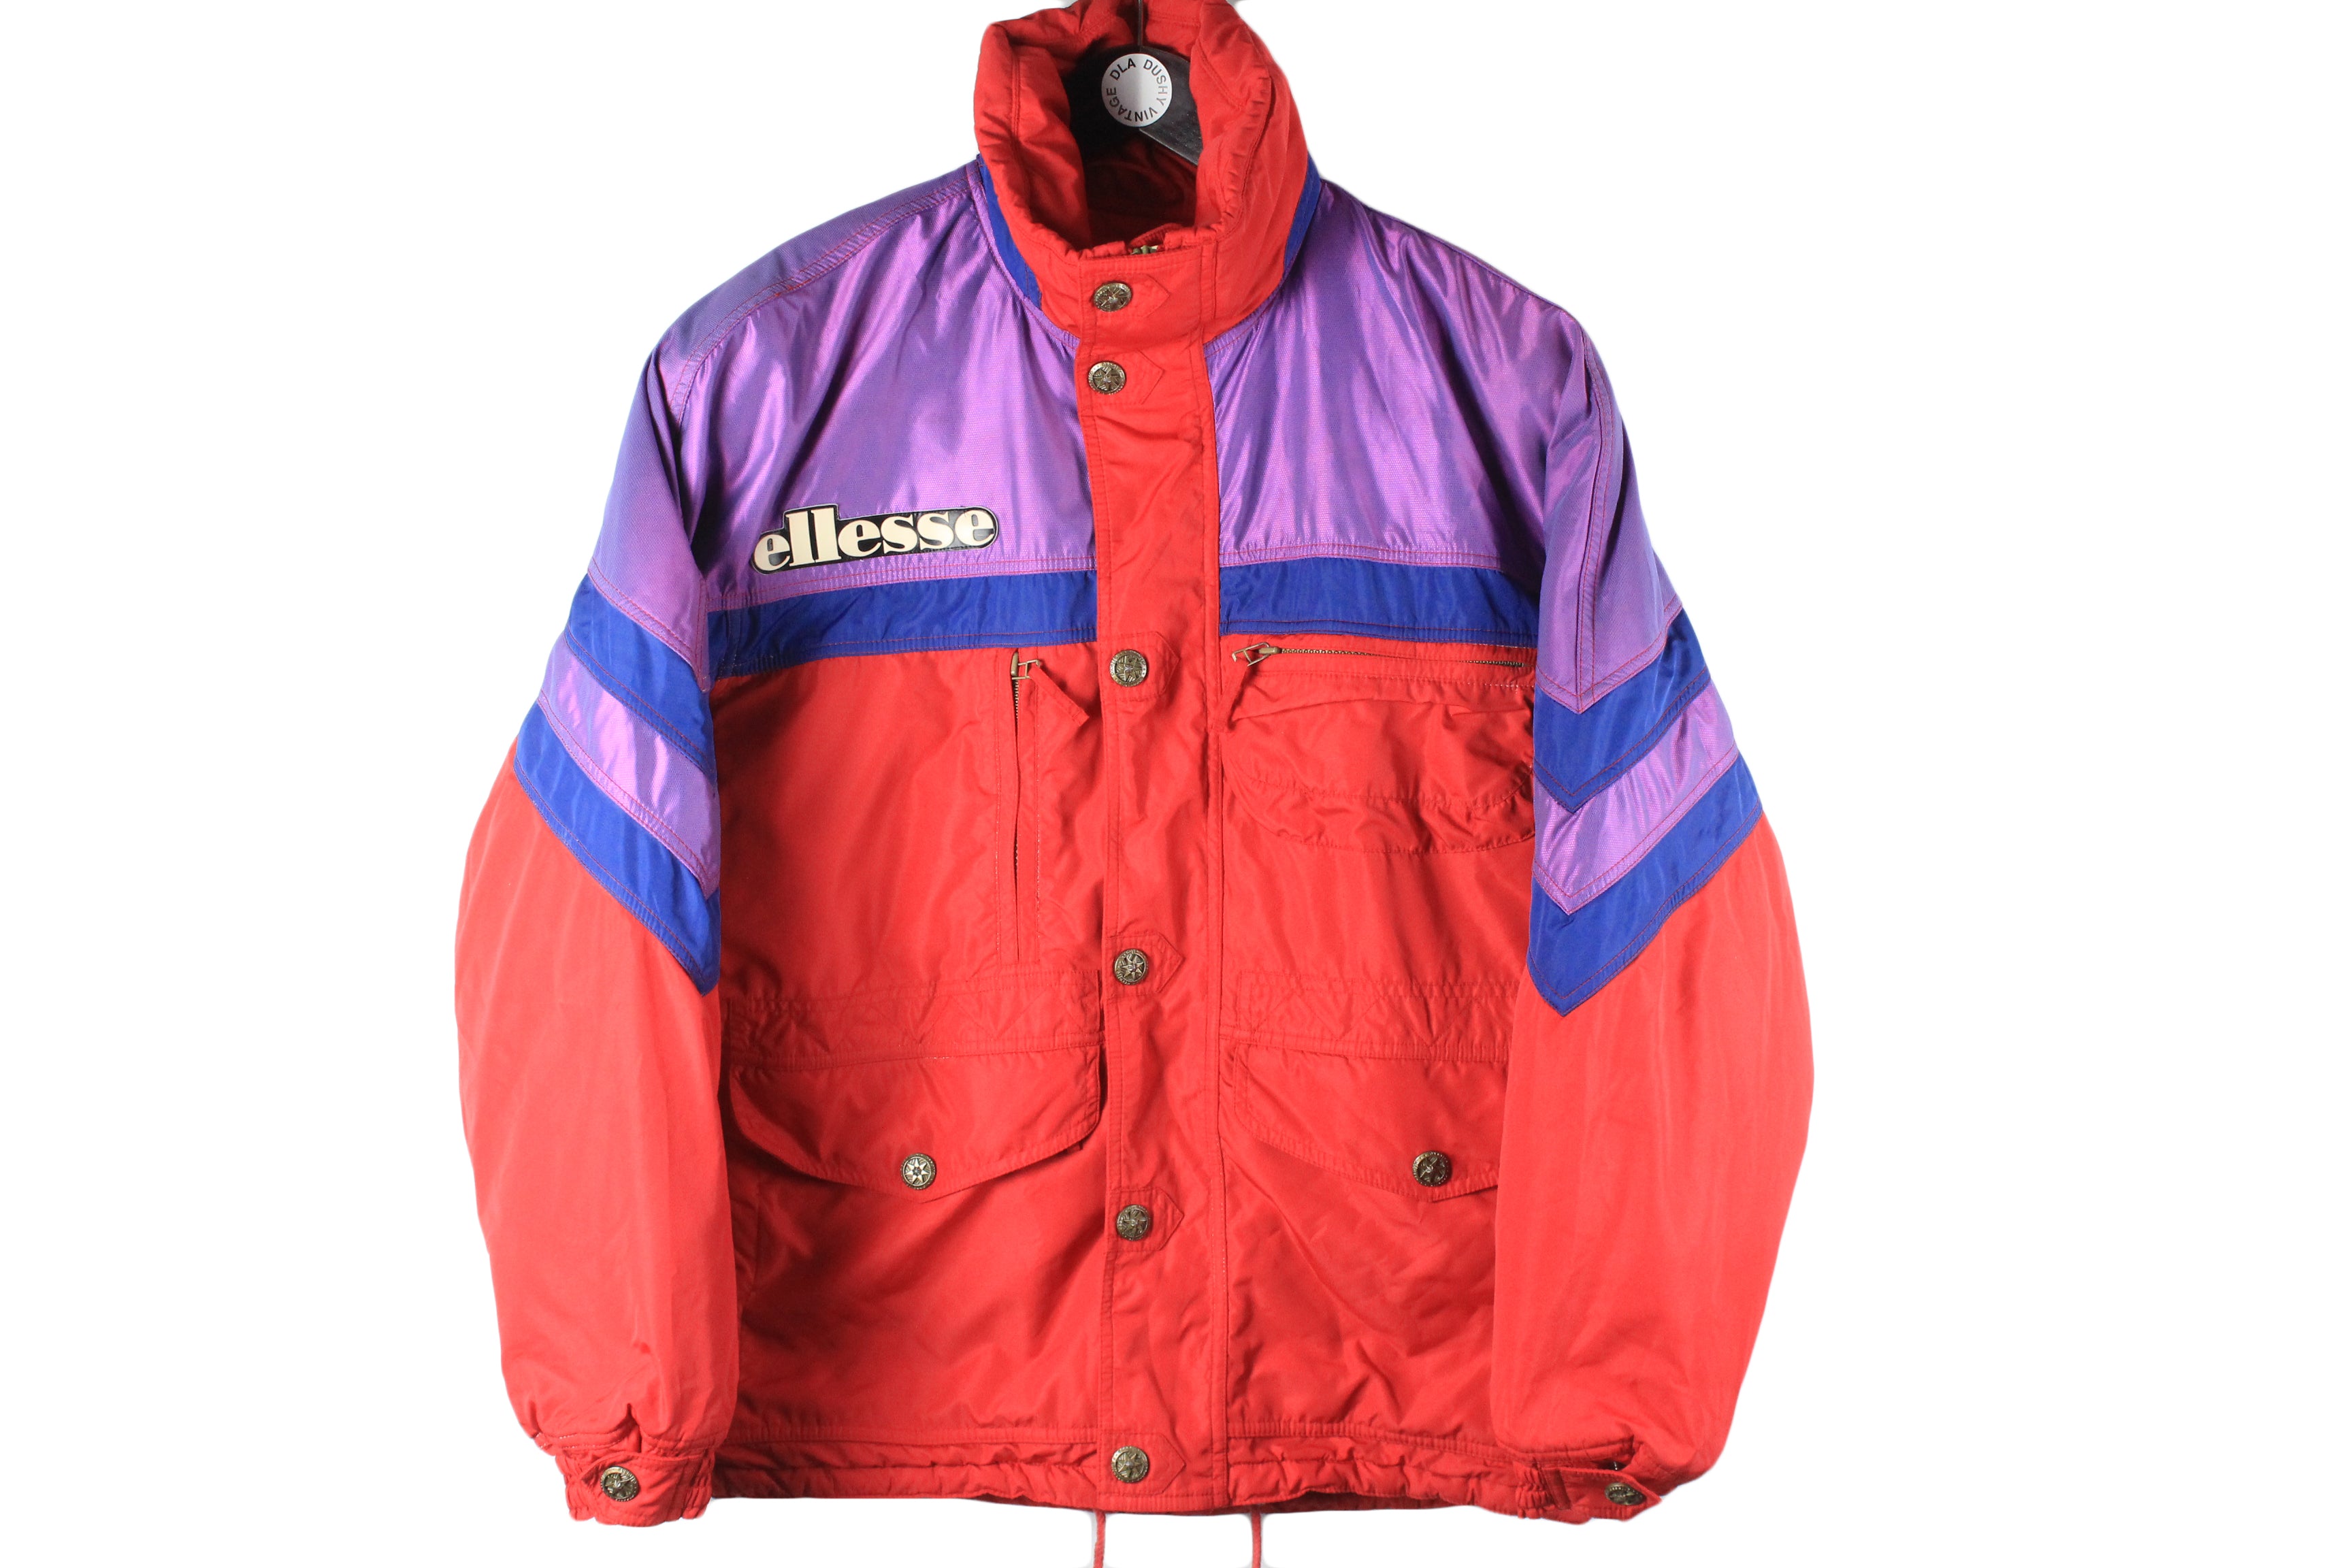 Vintage 1960s ellesse Brand Ski Active Wear Track Jacket, 60s Jacket, 60s  Ski Jacket, 60s Sportswear, Two Tone, Vintage Clothing 